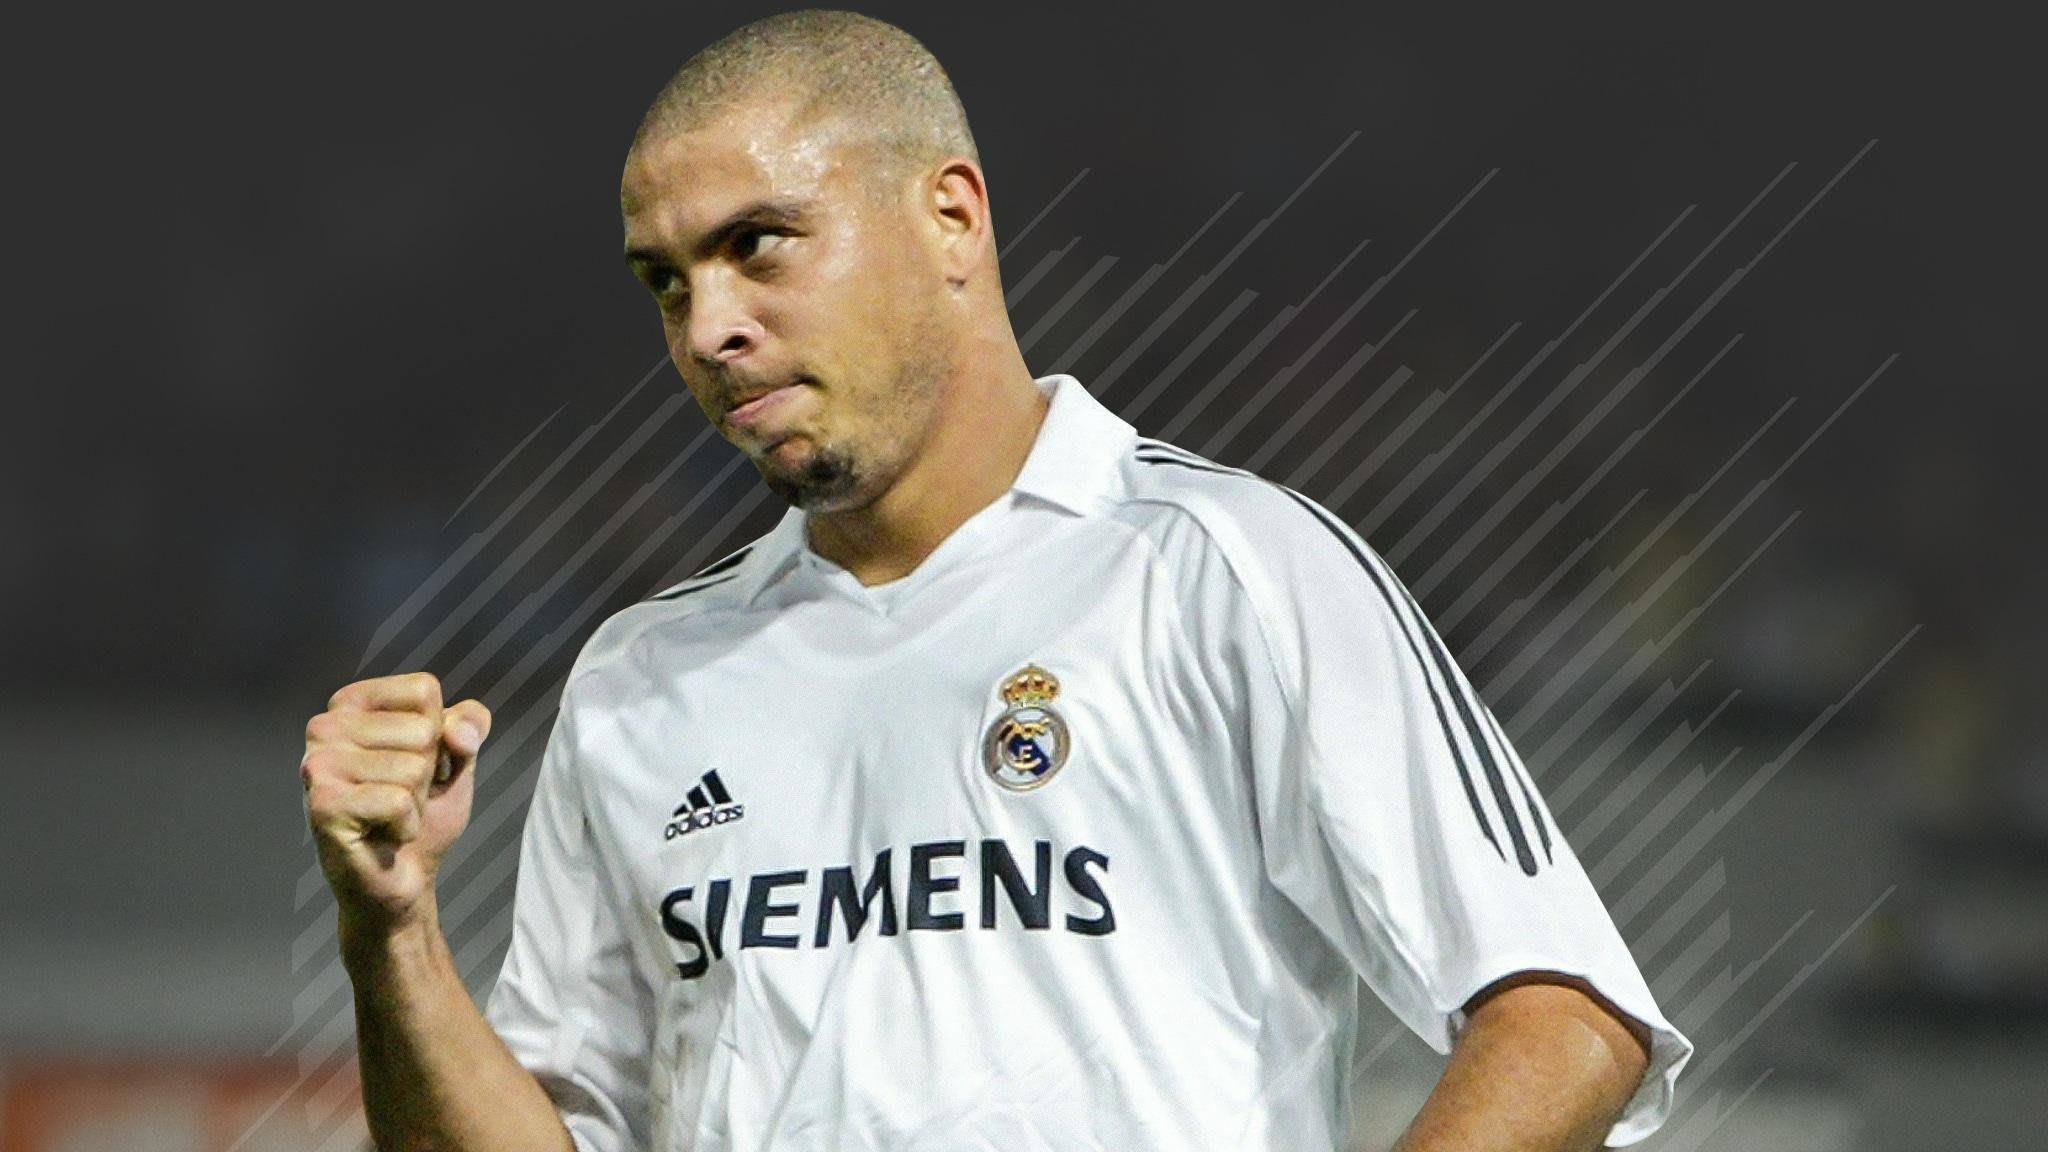 FIFA 18 Pre-Order Offers - ICON, Ronaldo and Standard Edition